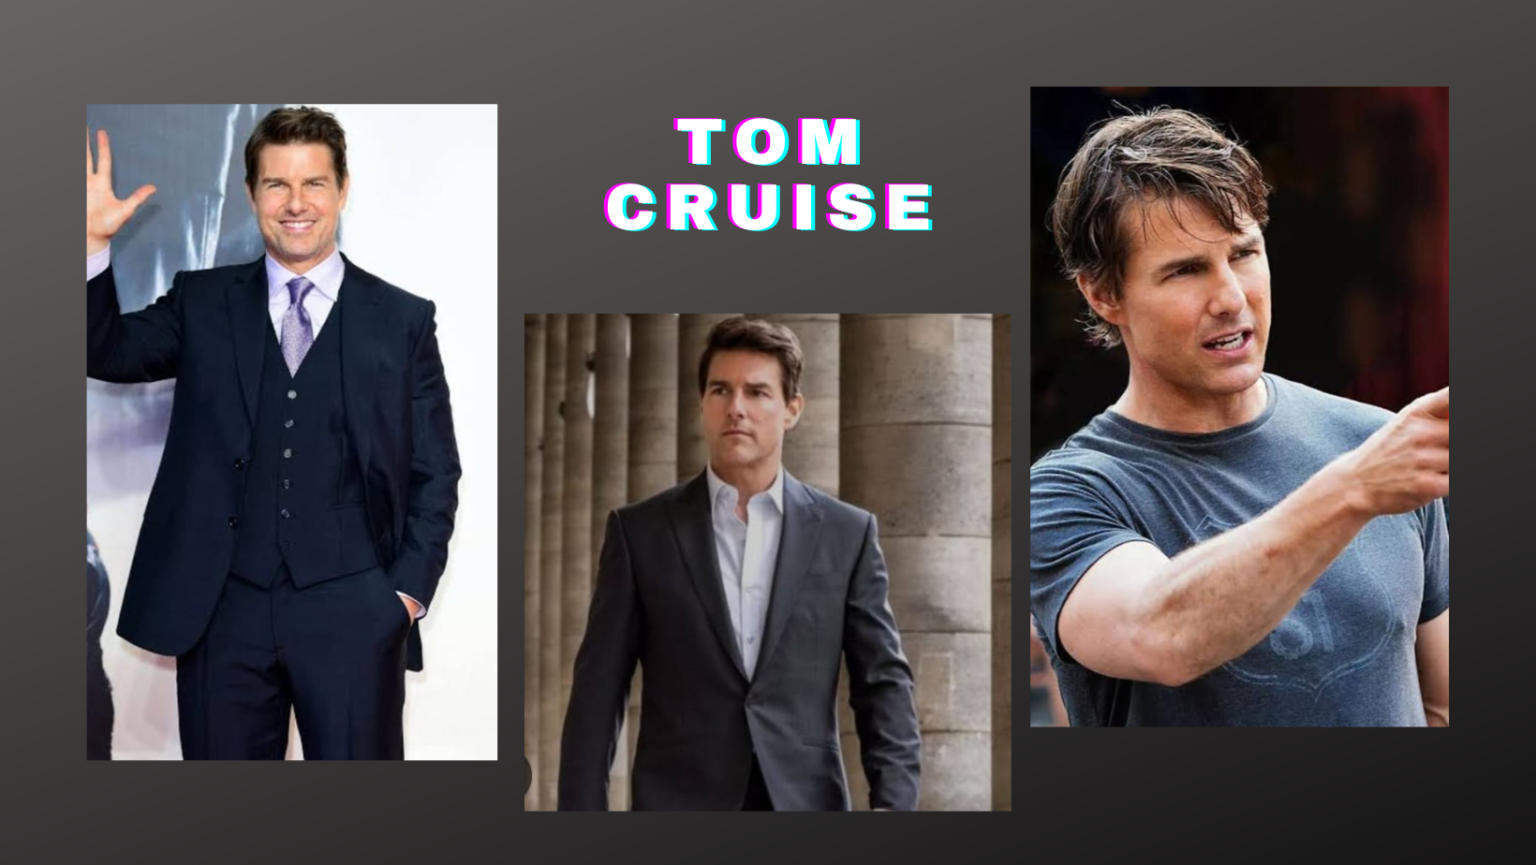 Tom Cruise Workout